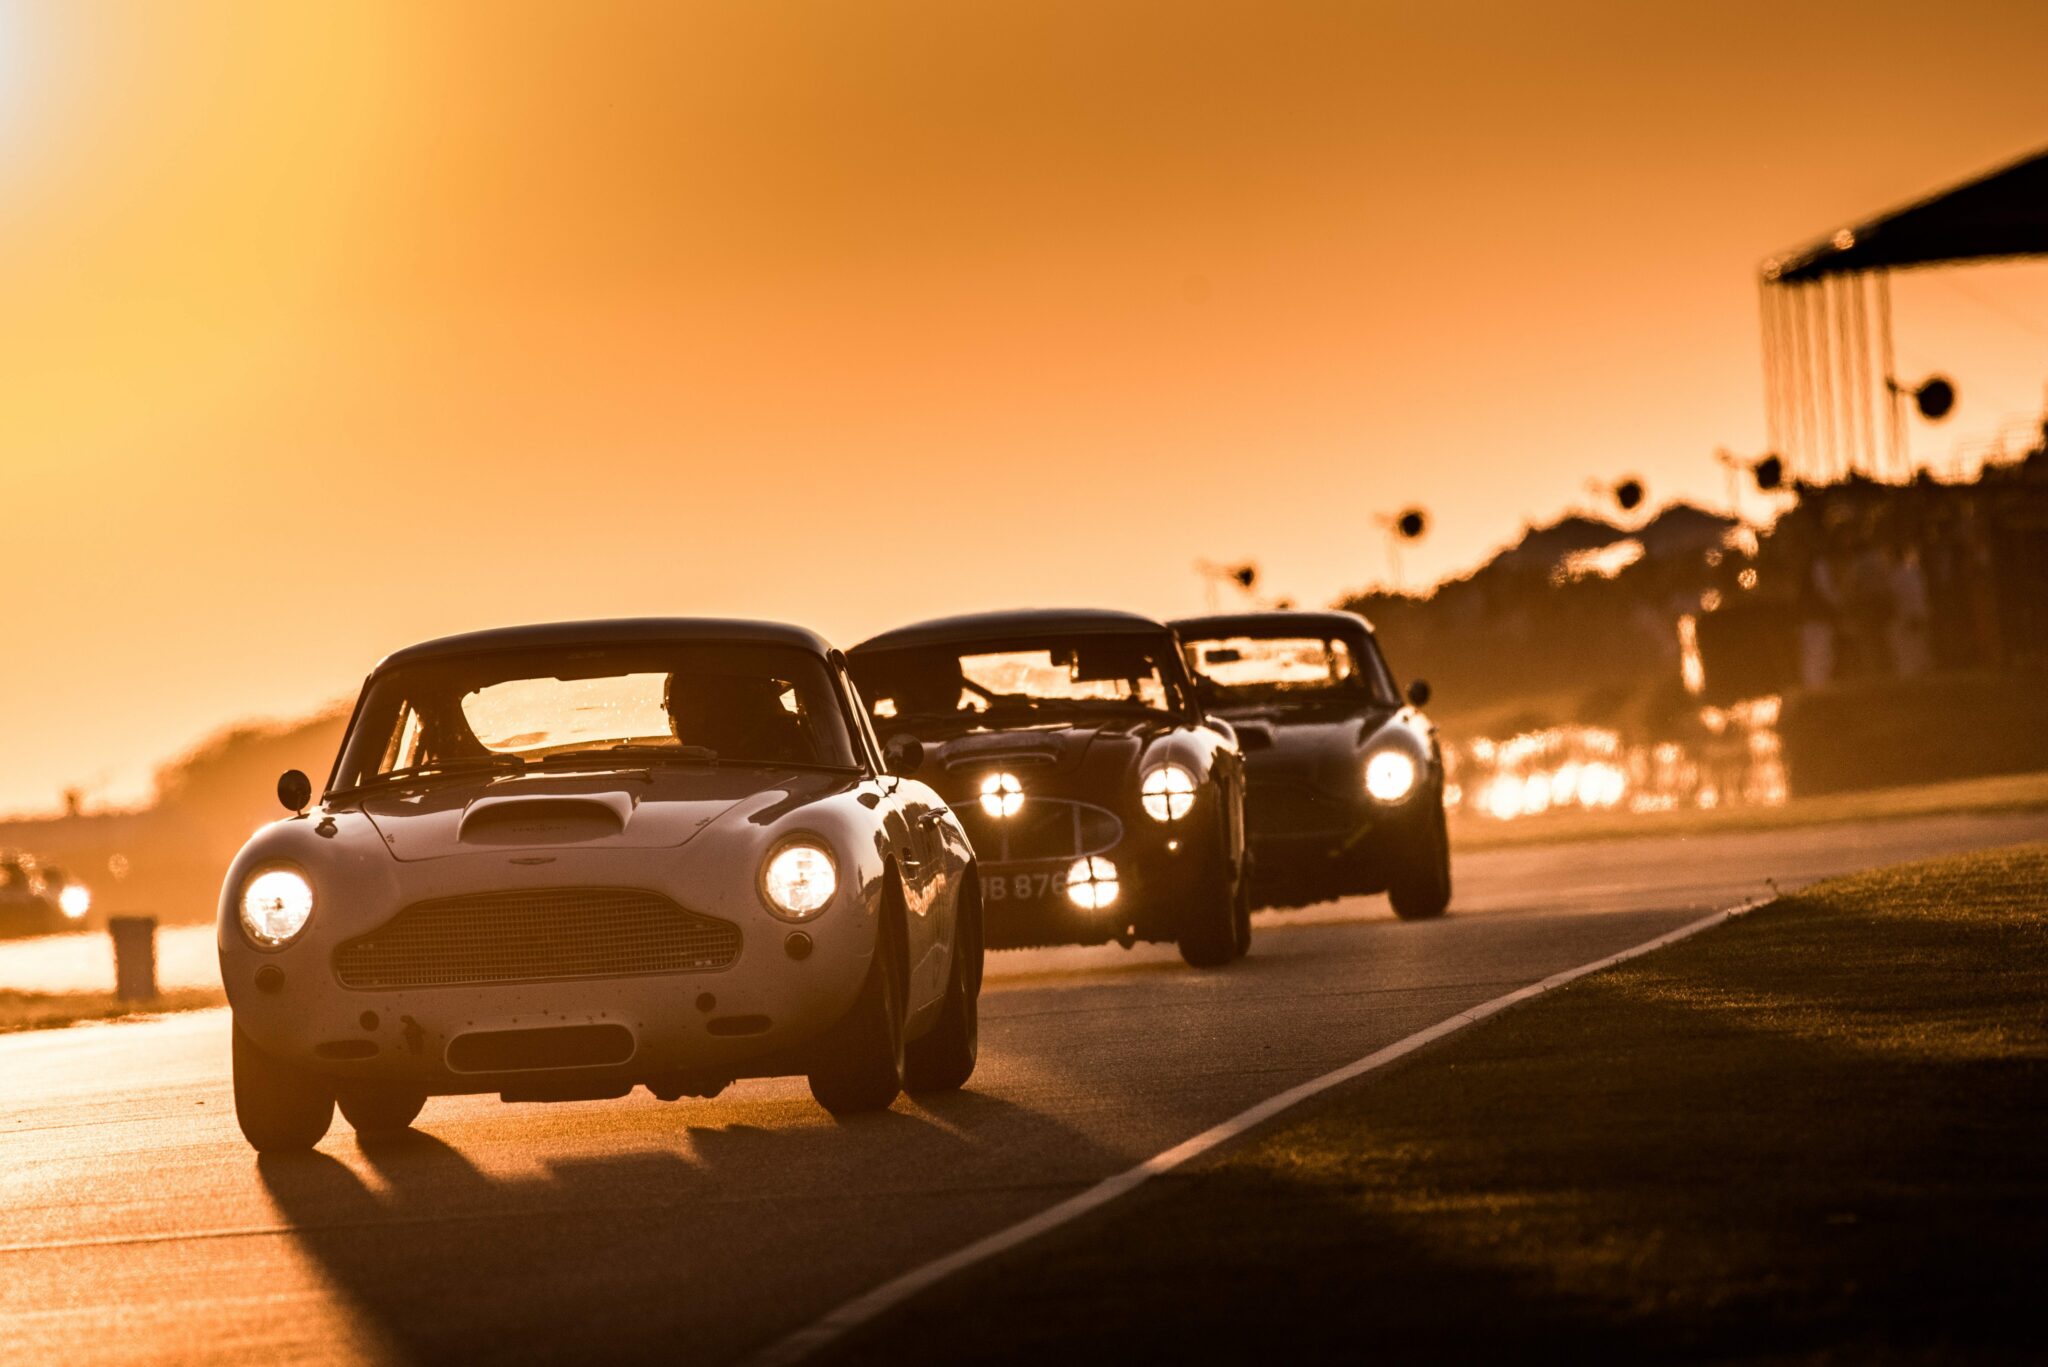 Vintage Goodwood race cars racing at sunset